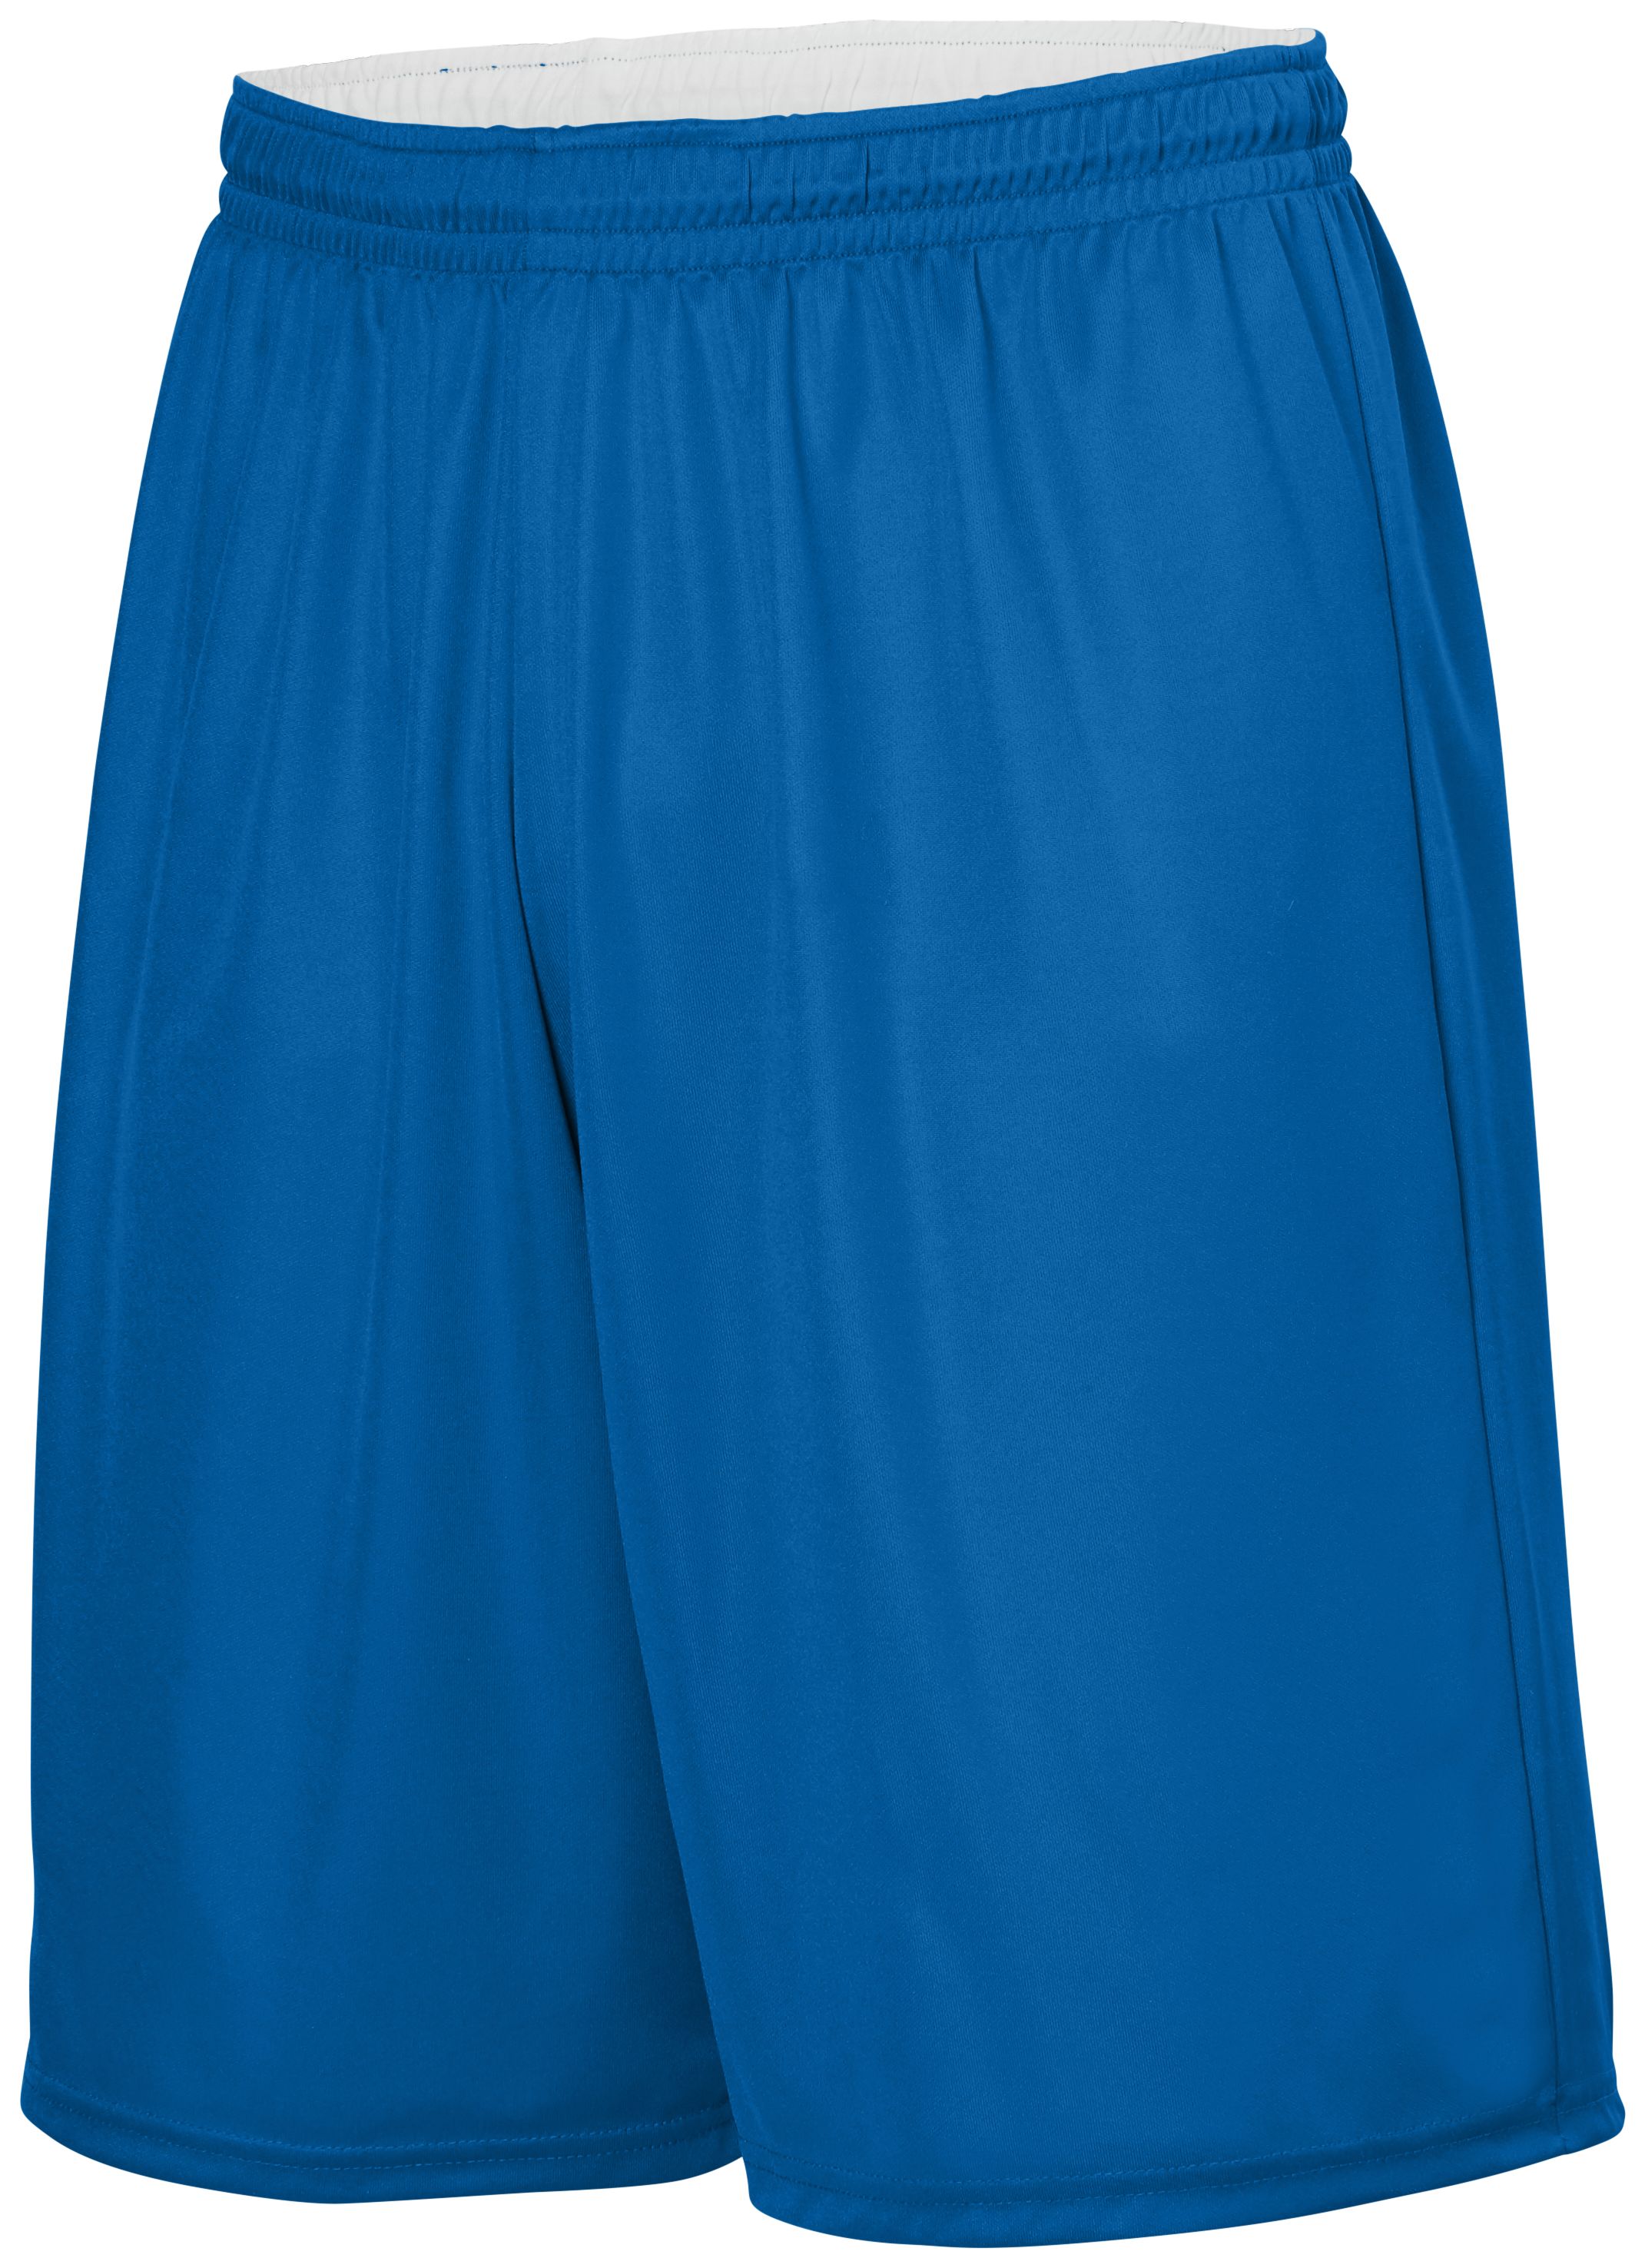 Augusta Sportswear 1406 - Reversible Wicking Shorts